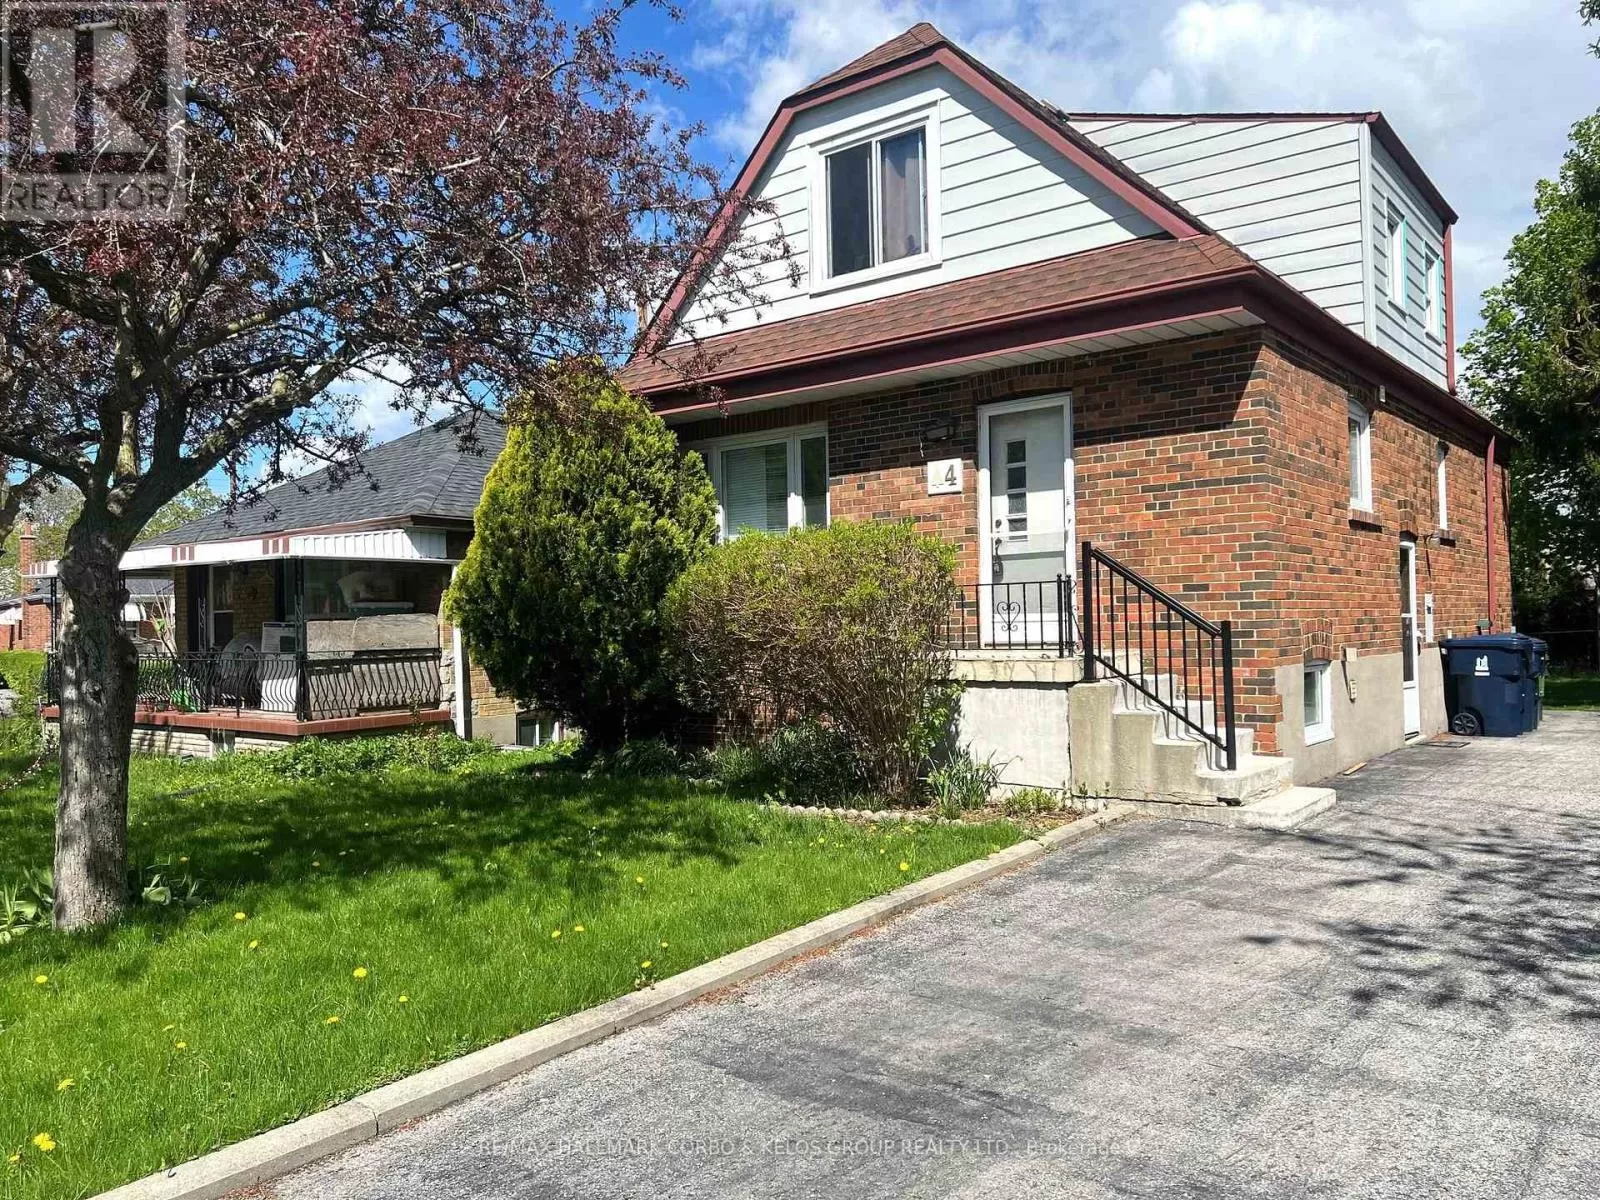 House for rent: 4 Valerie Road, Toronto, Ontario M1P 1E9